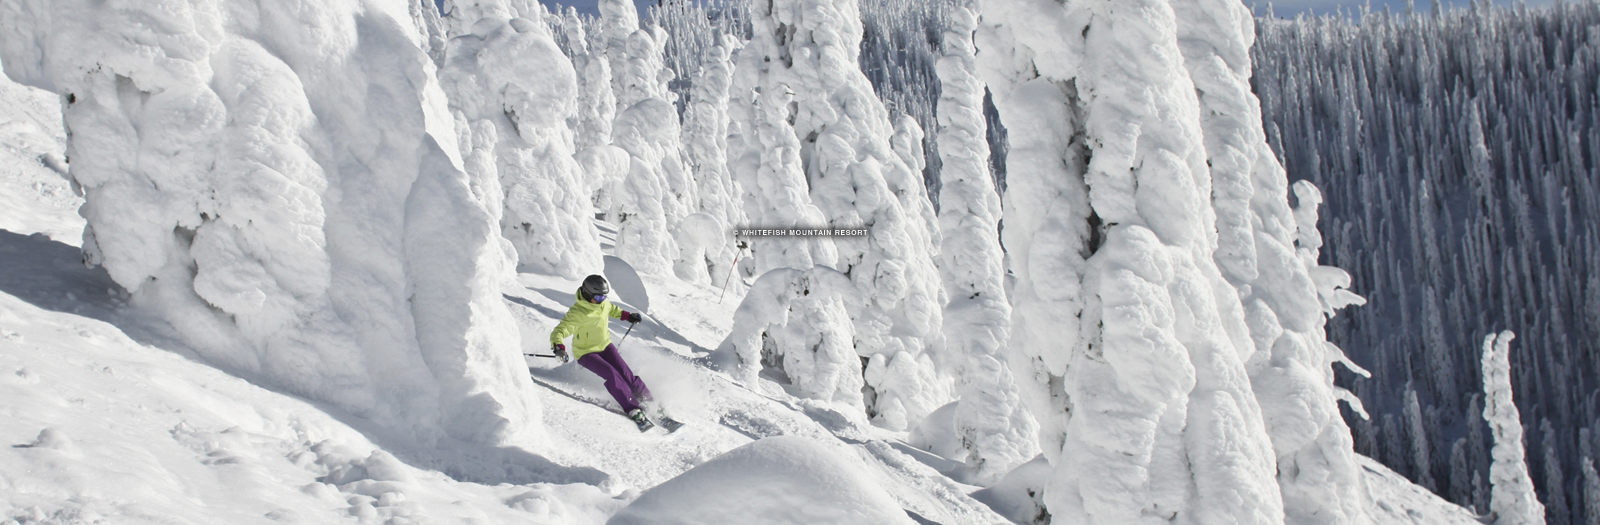 whitefish mountain resort beginner skiing